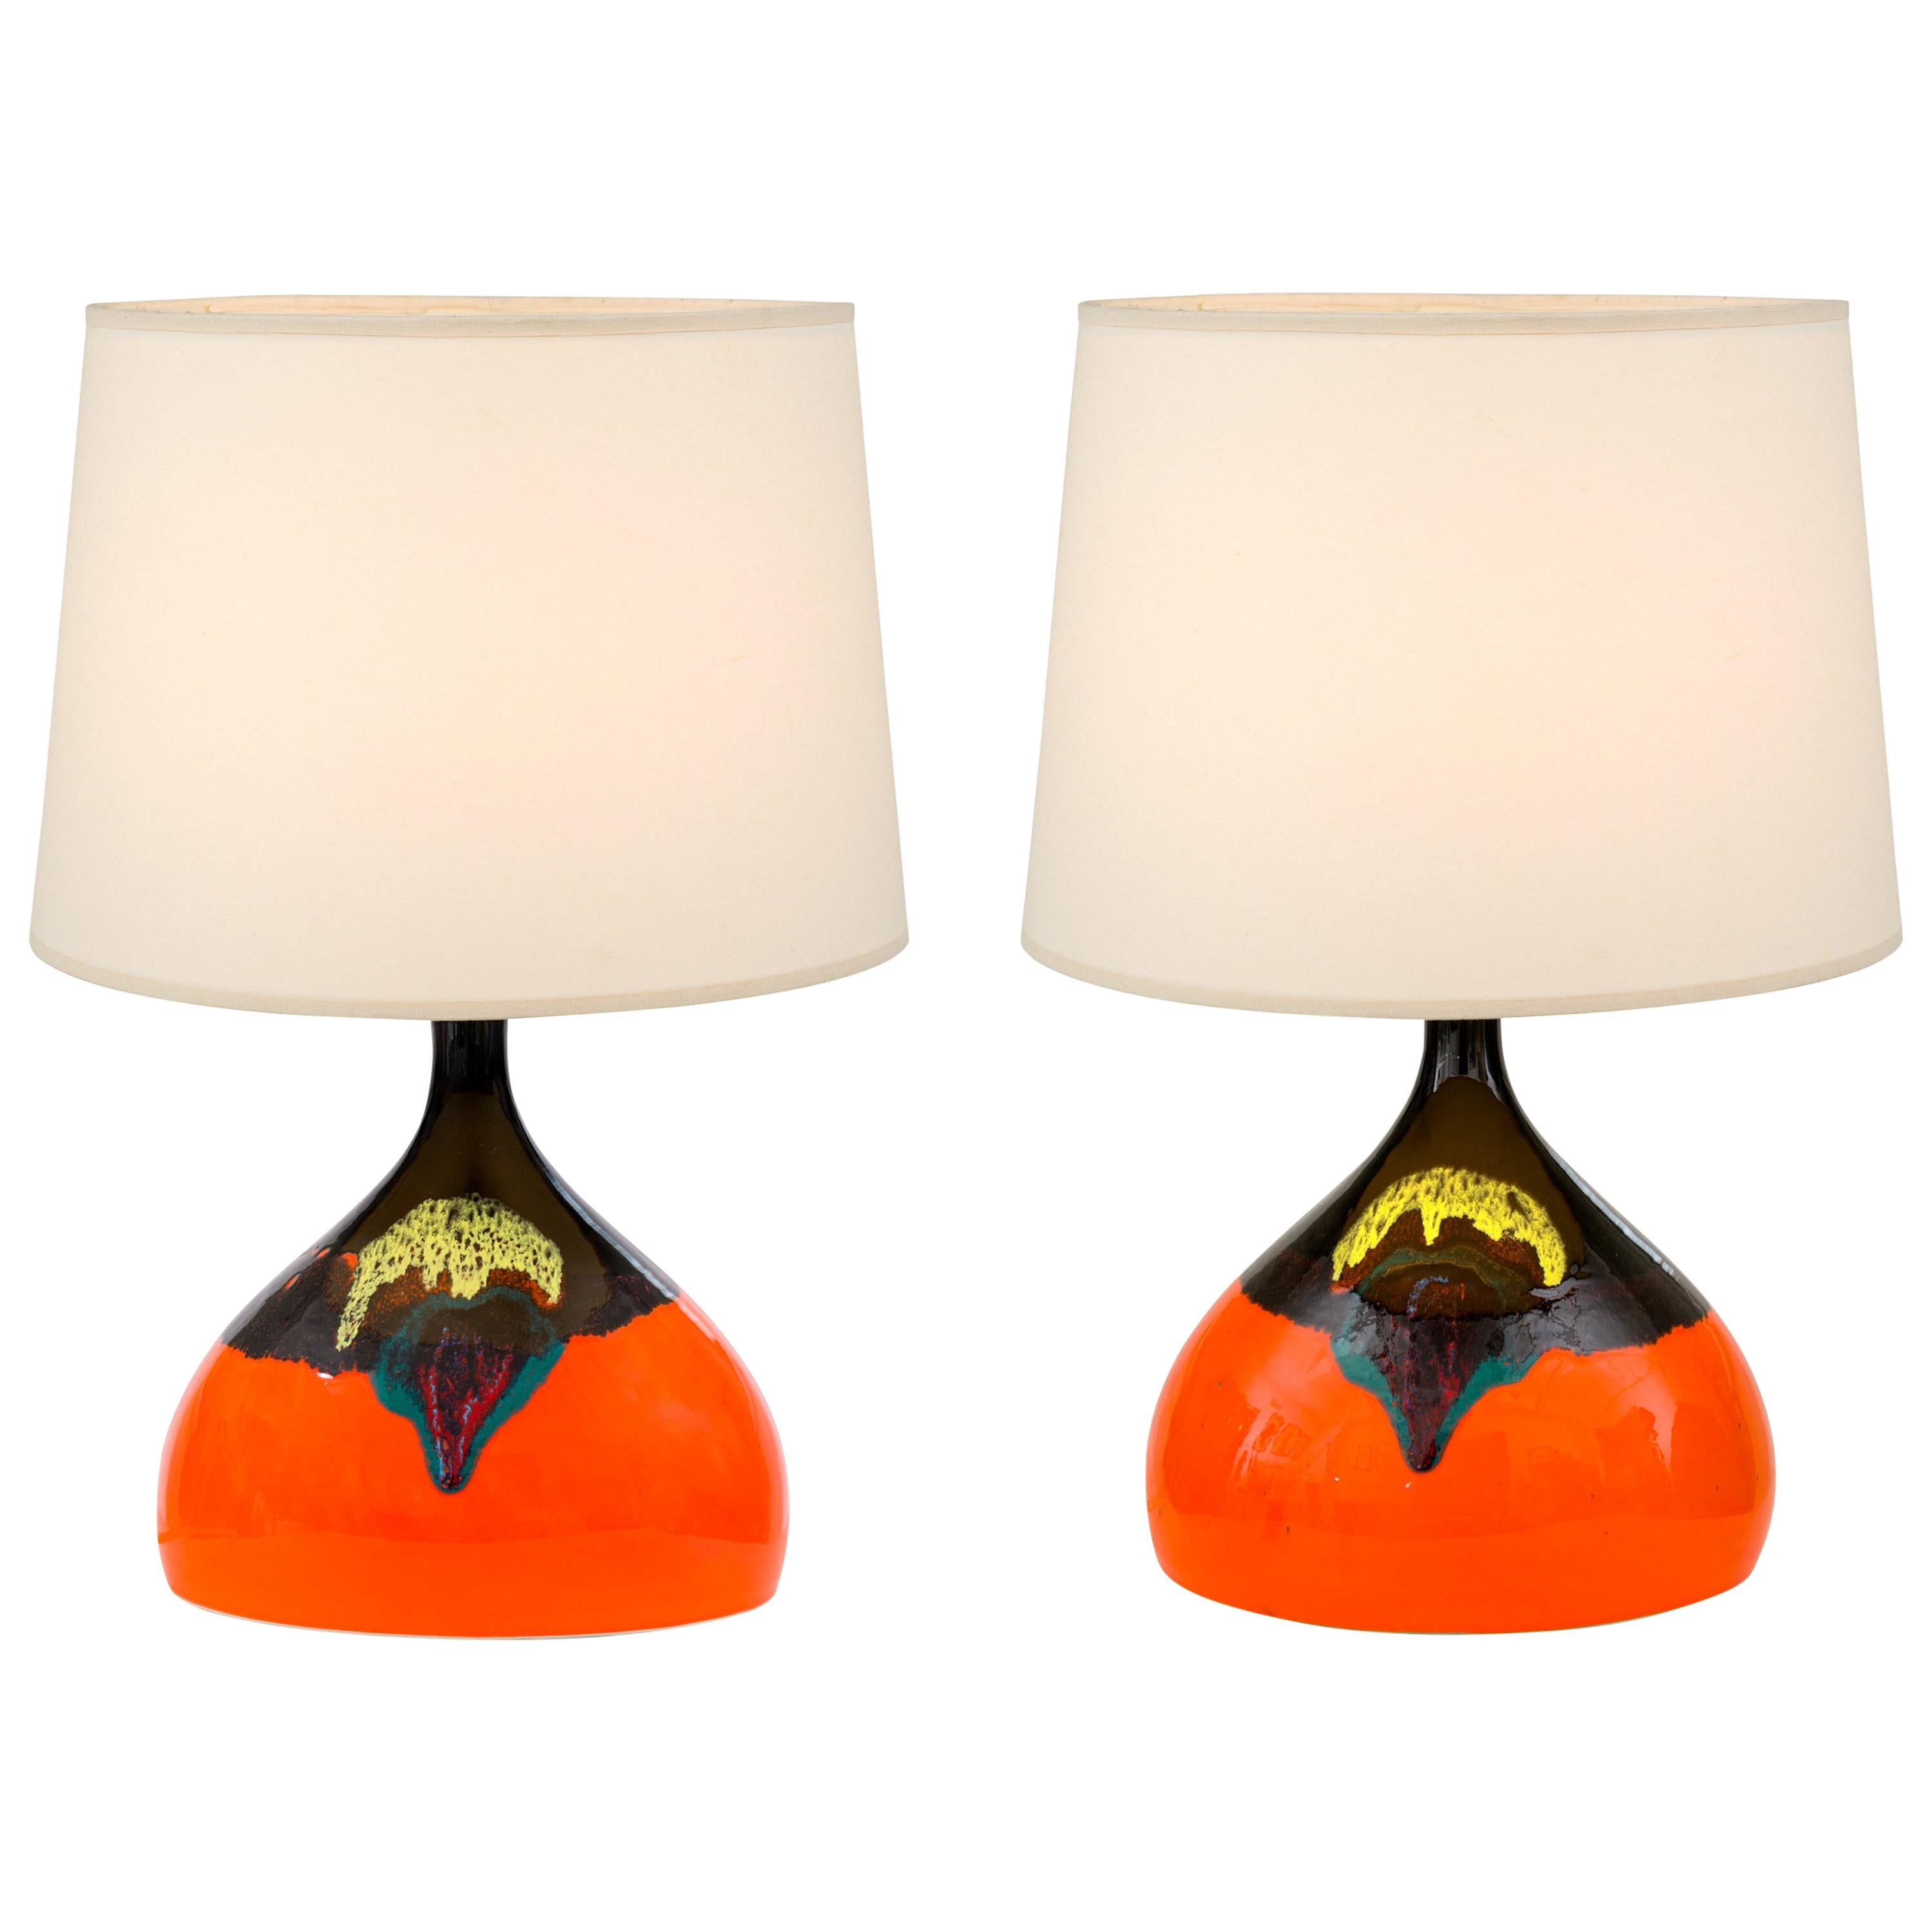 Bjorn Wiinblad Signed Orange Ceramic Table Lamps for Rosenthal, Denmark 1960s